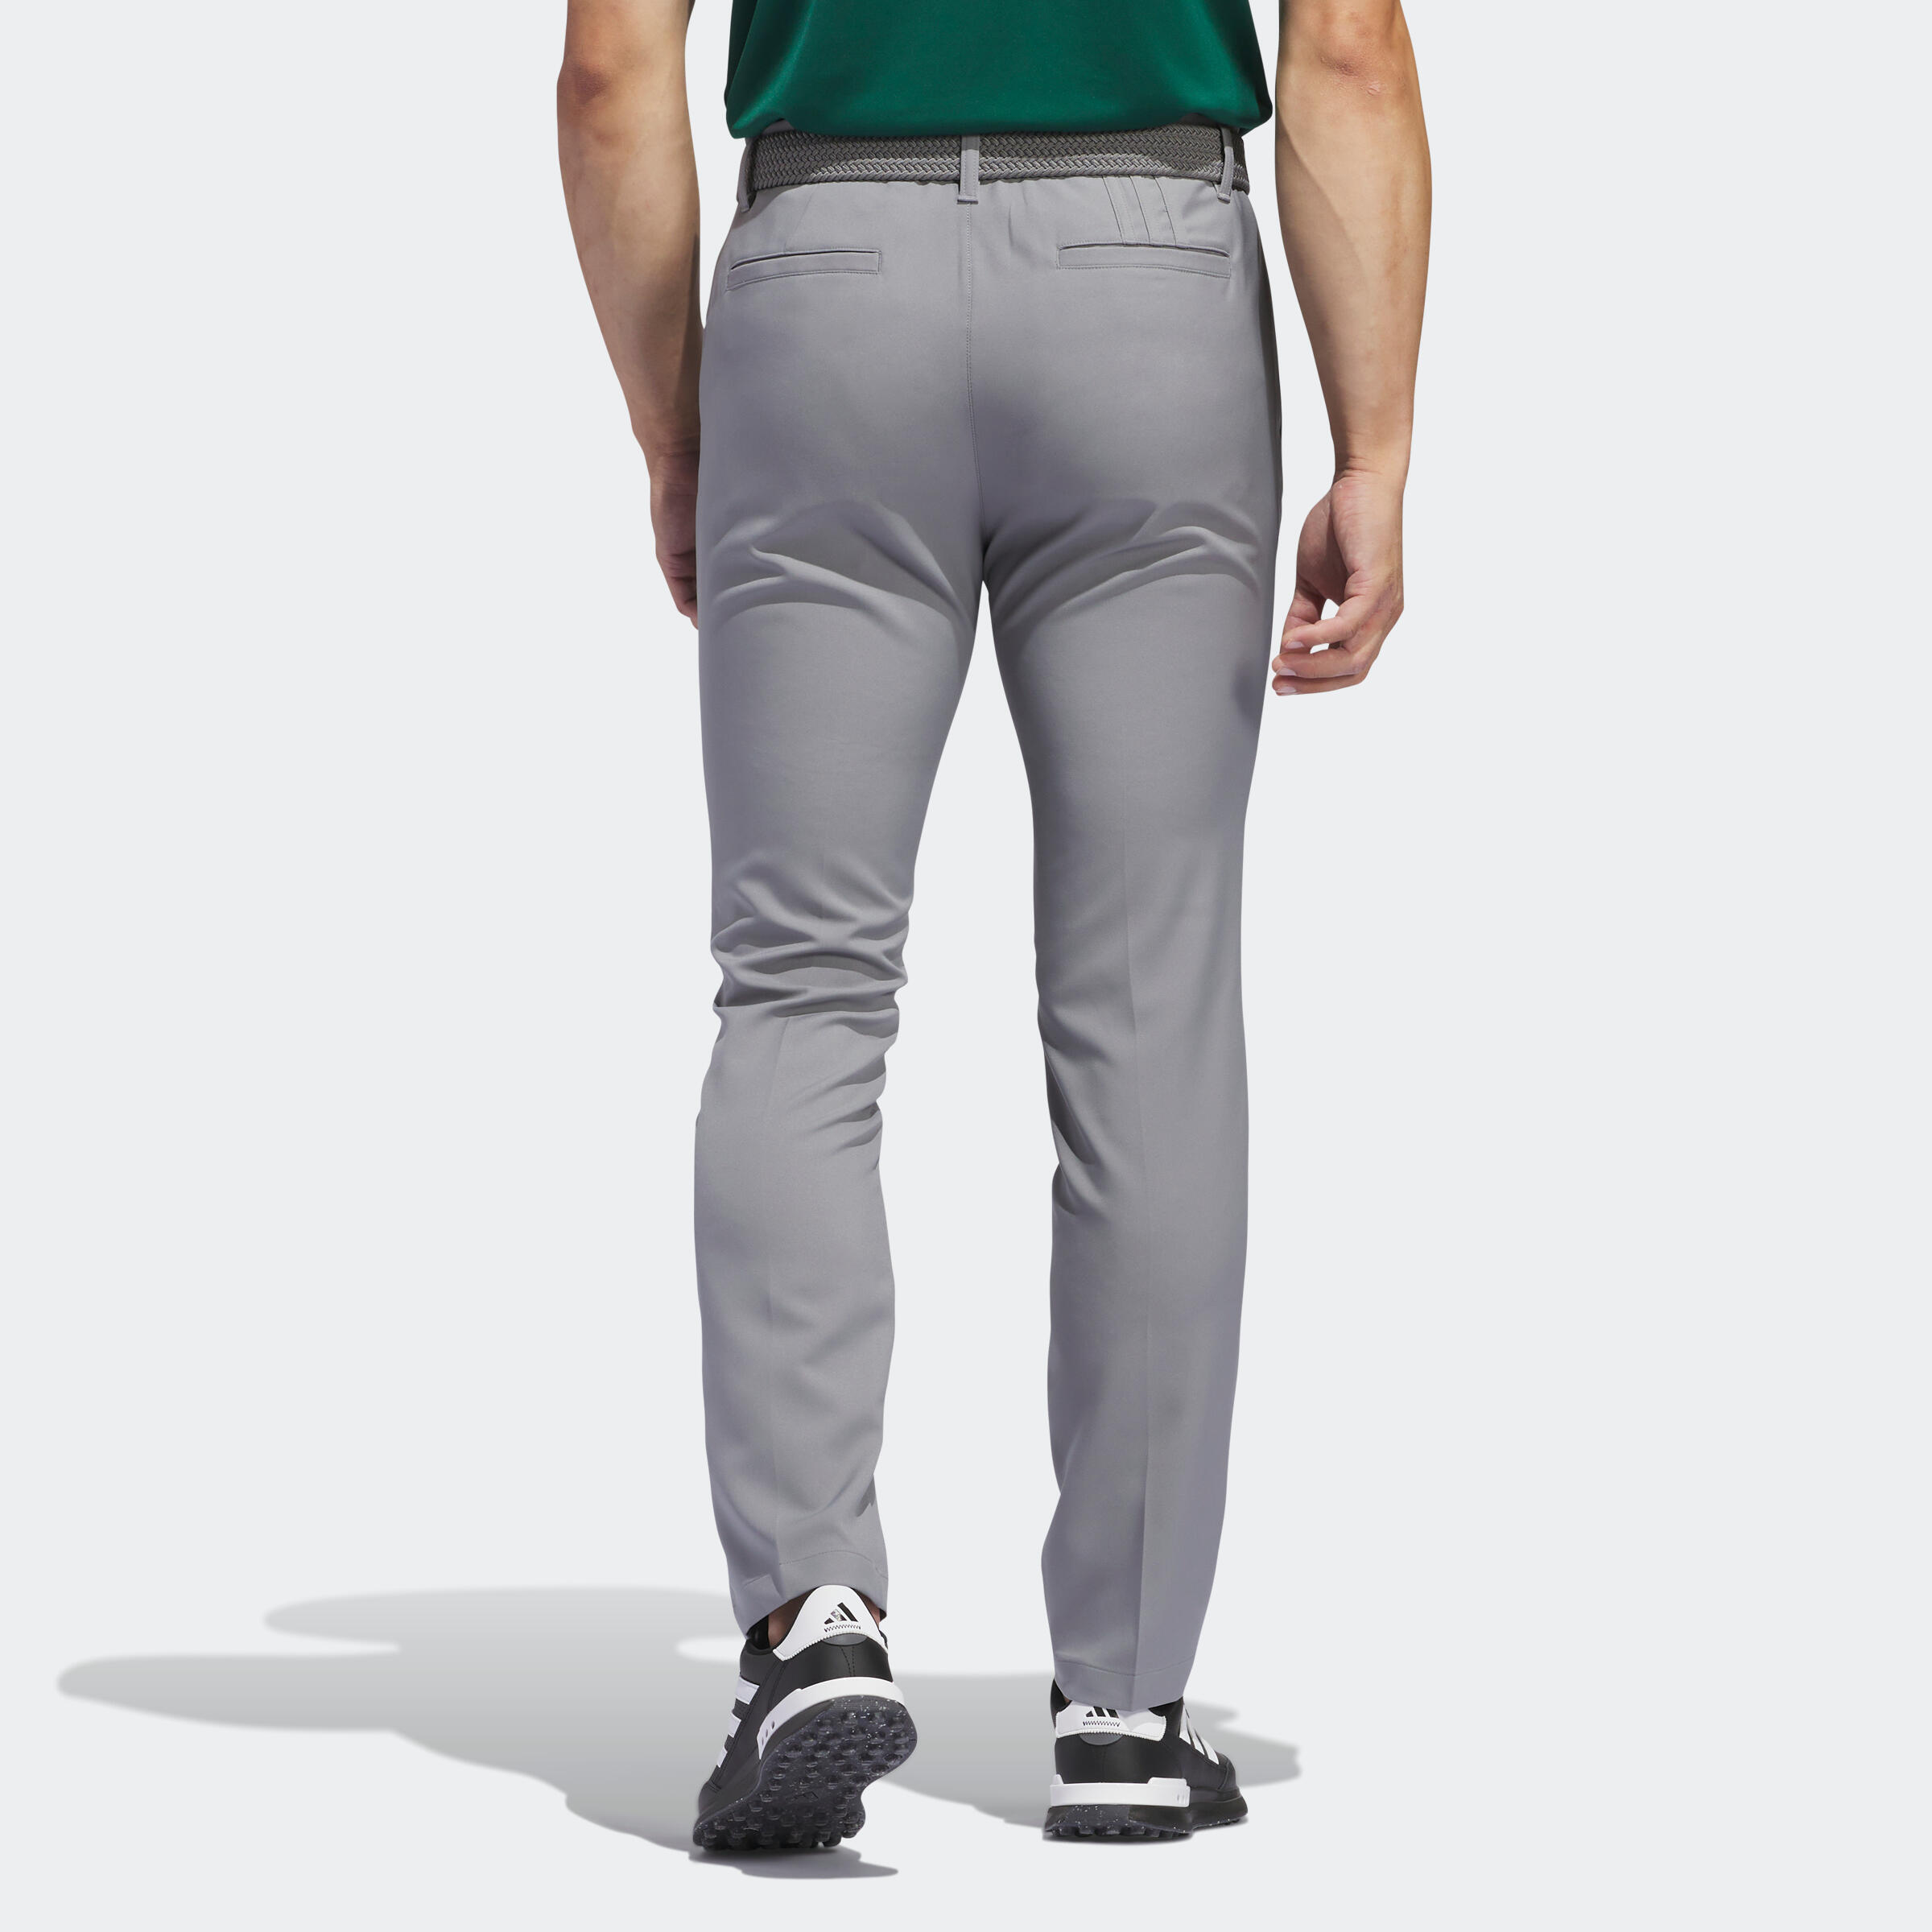 Men's golf trousers - Adidas grey 2/4